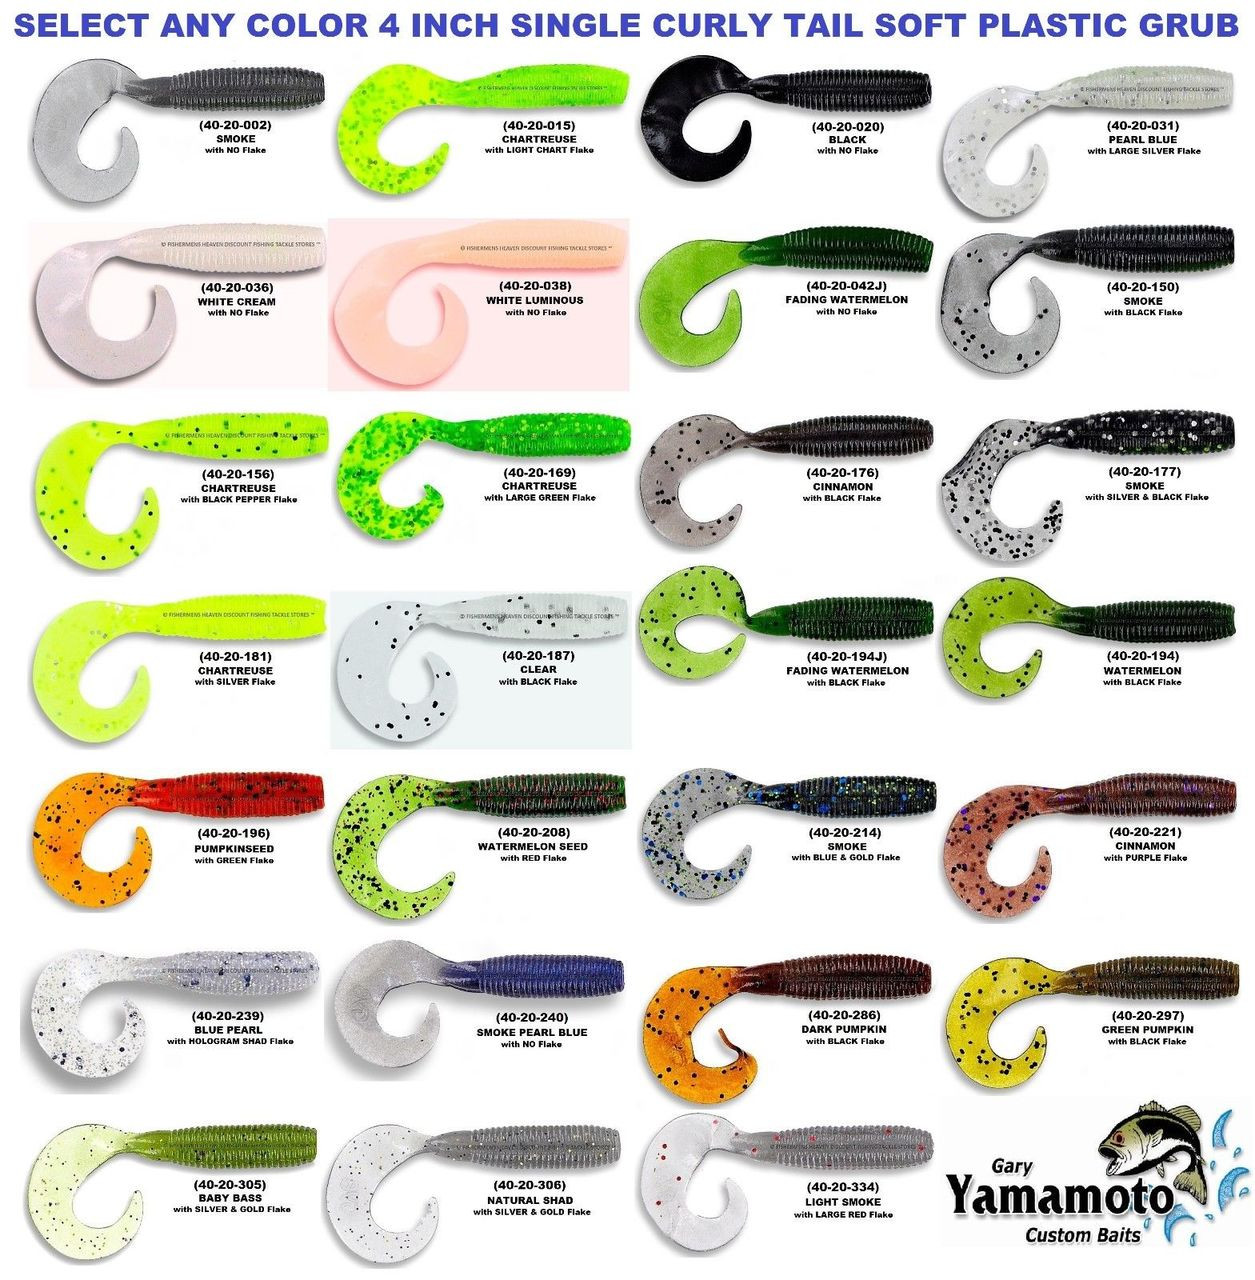 4 packs gary yamamoto 4" single tail grub 40-20-038 luminous white curly tail 